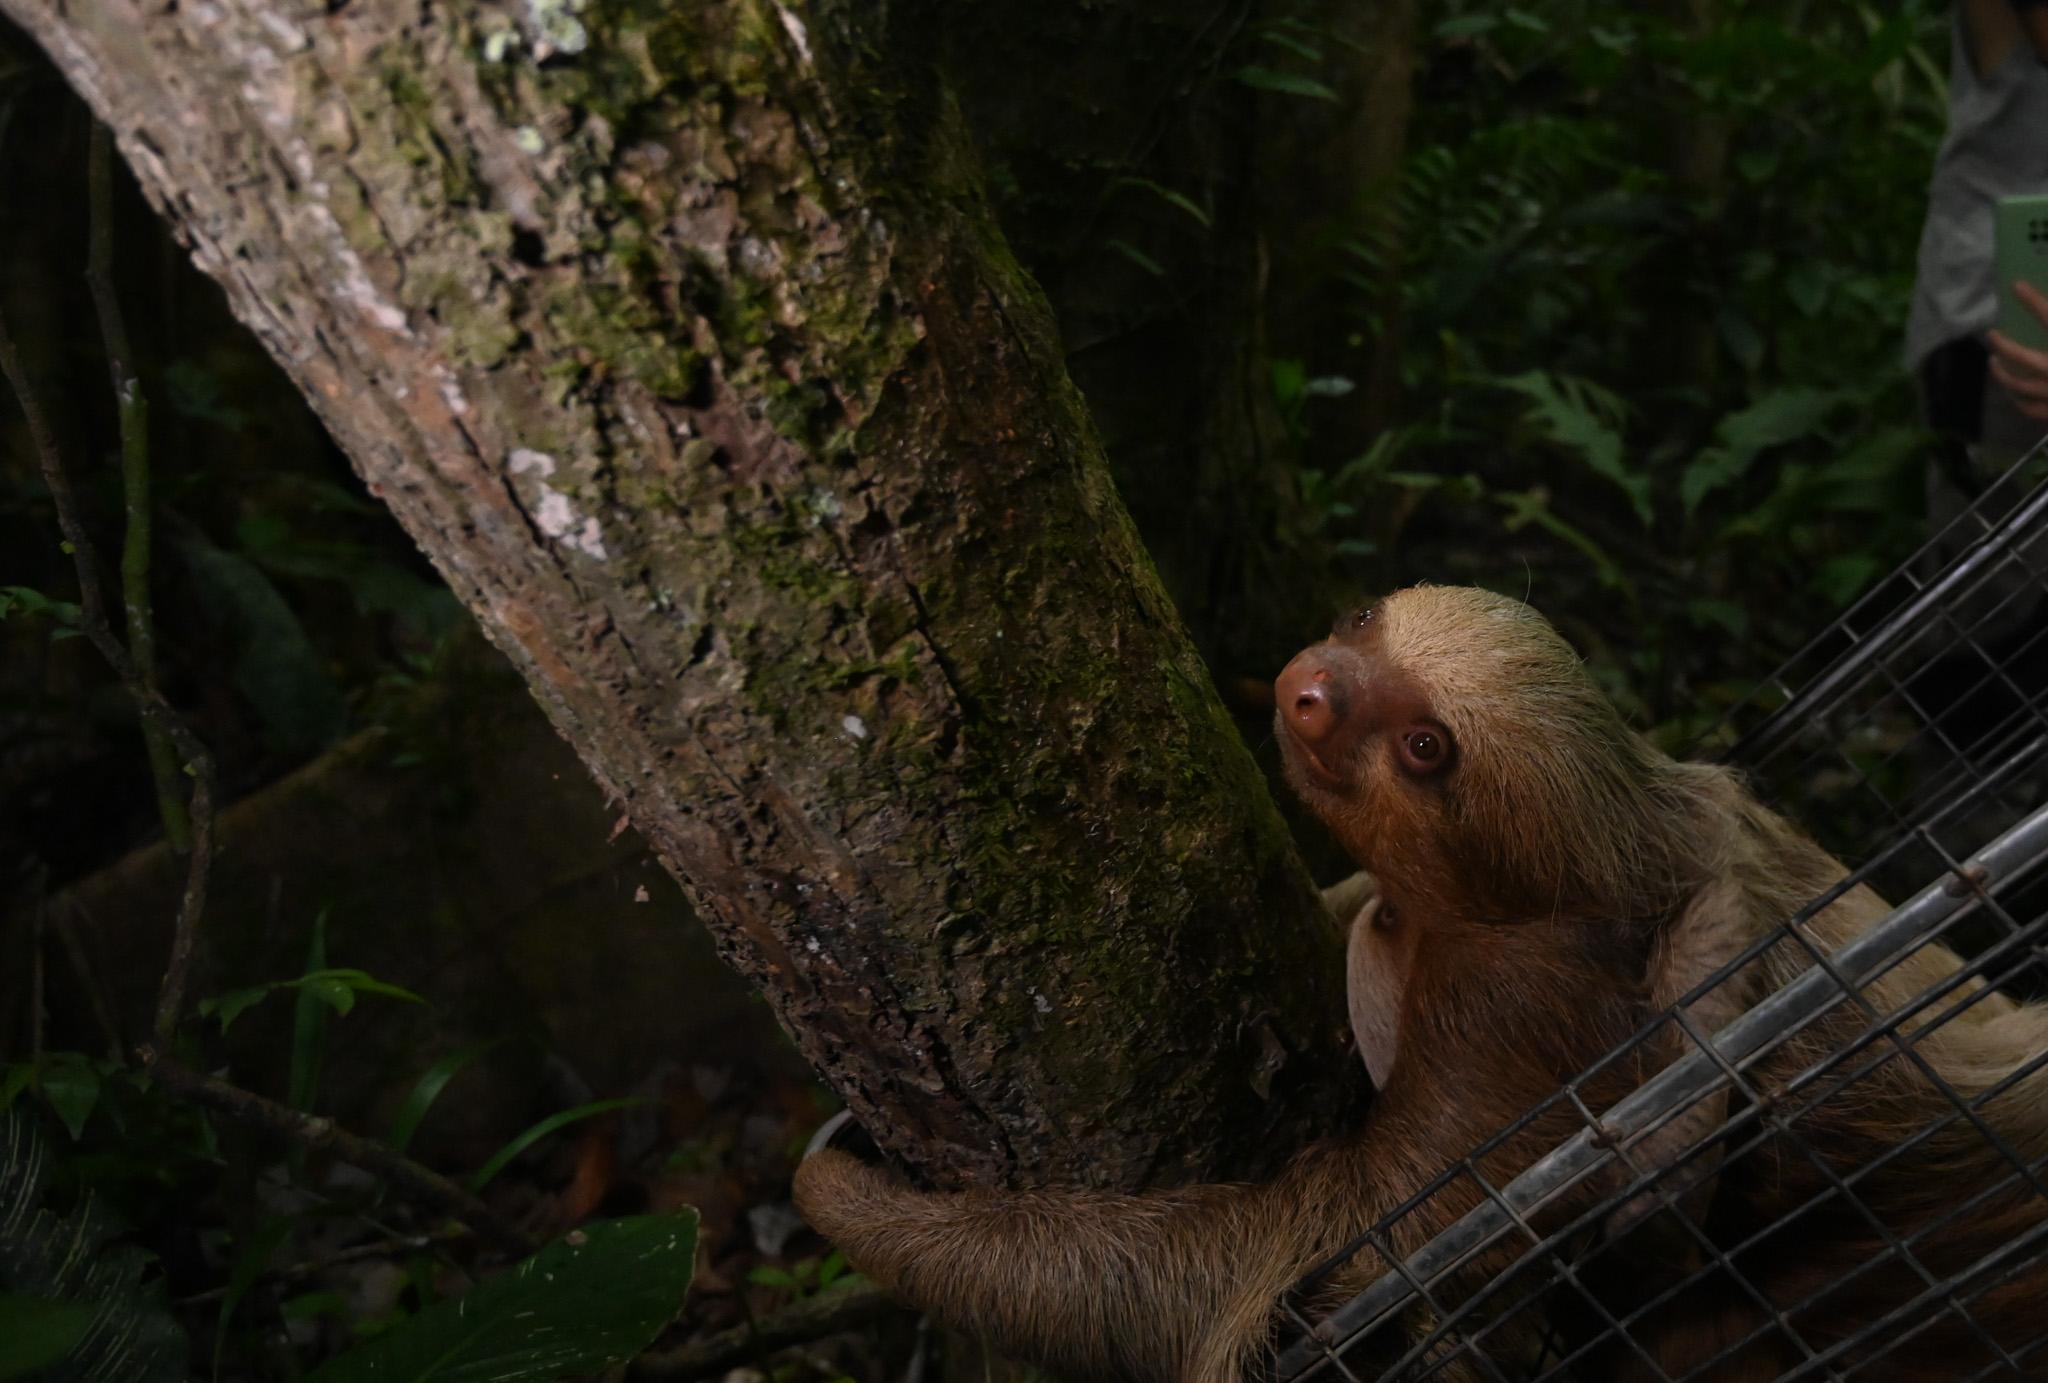 Saving Animals in the Amazon